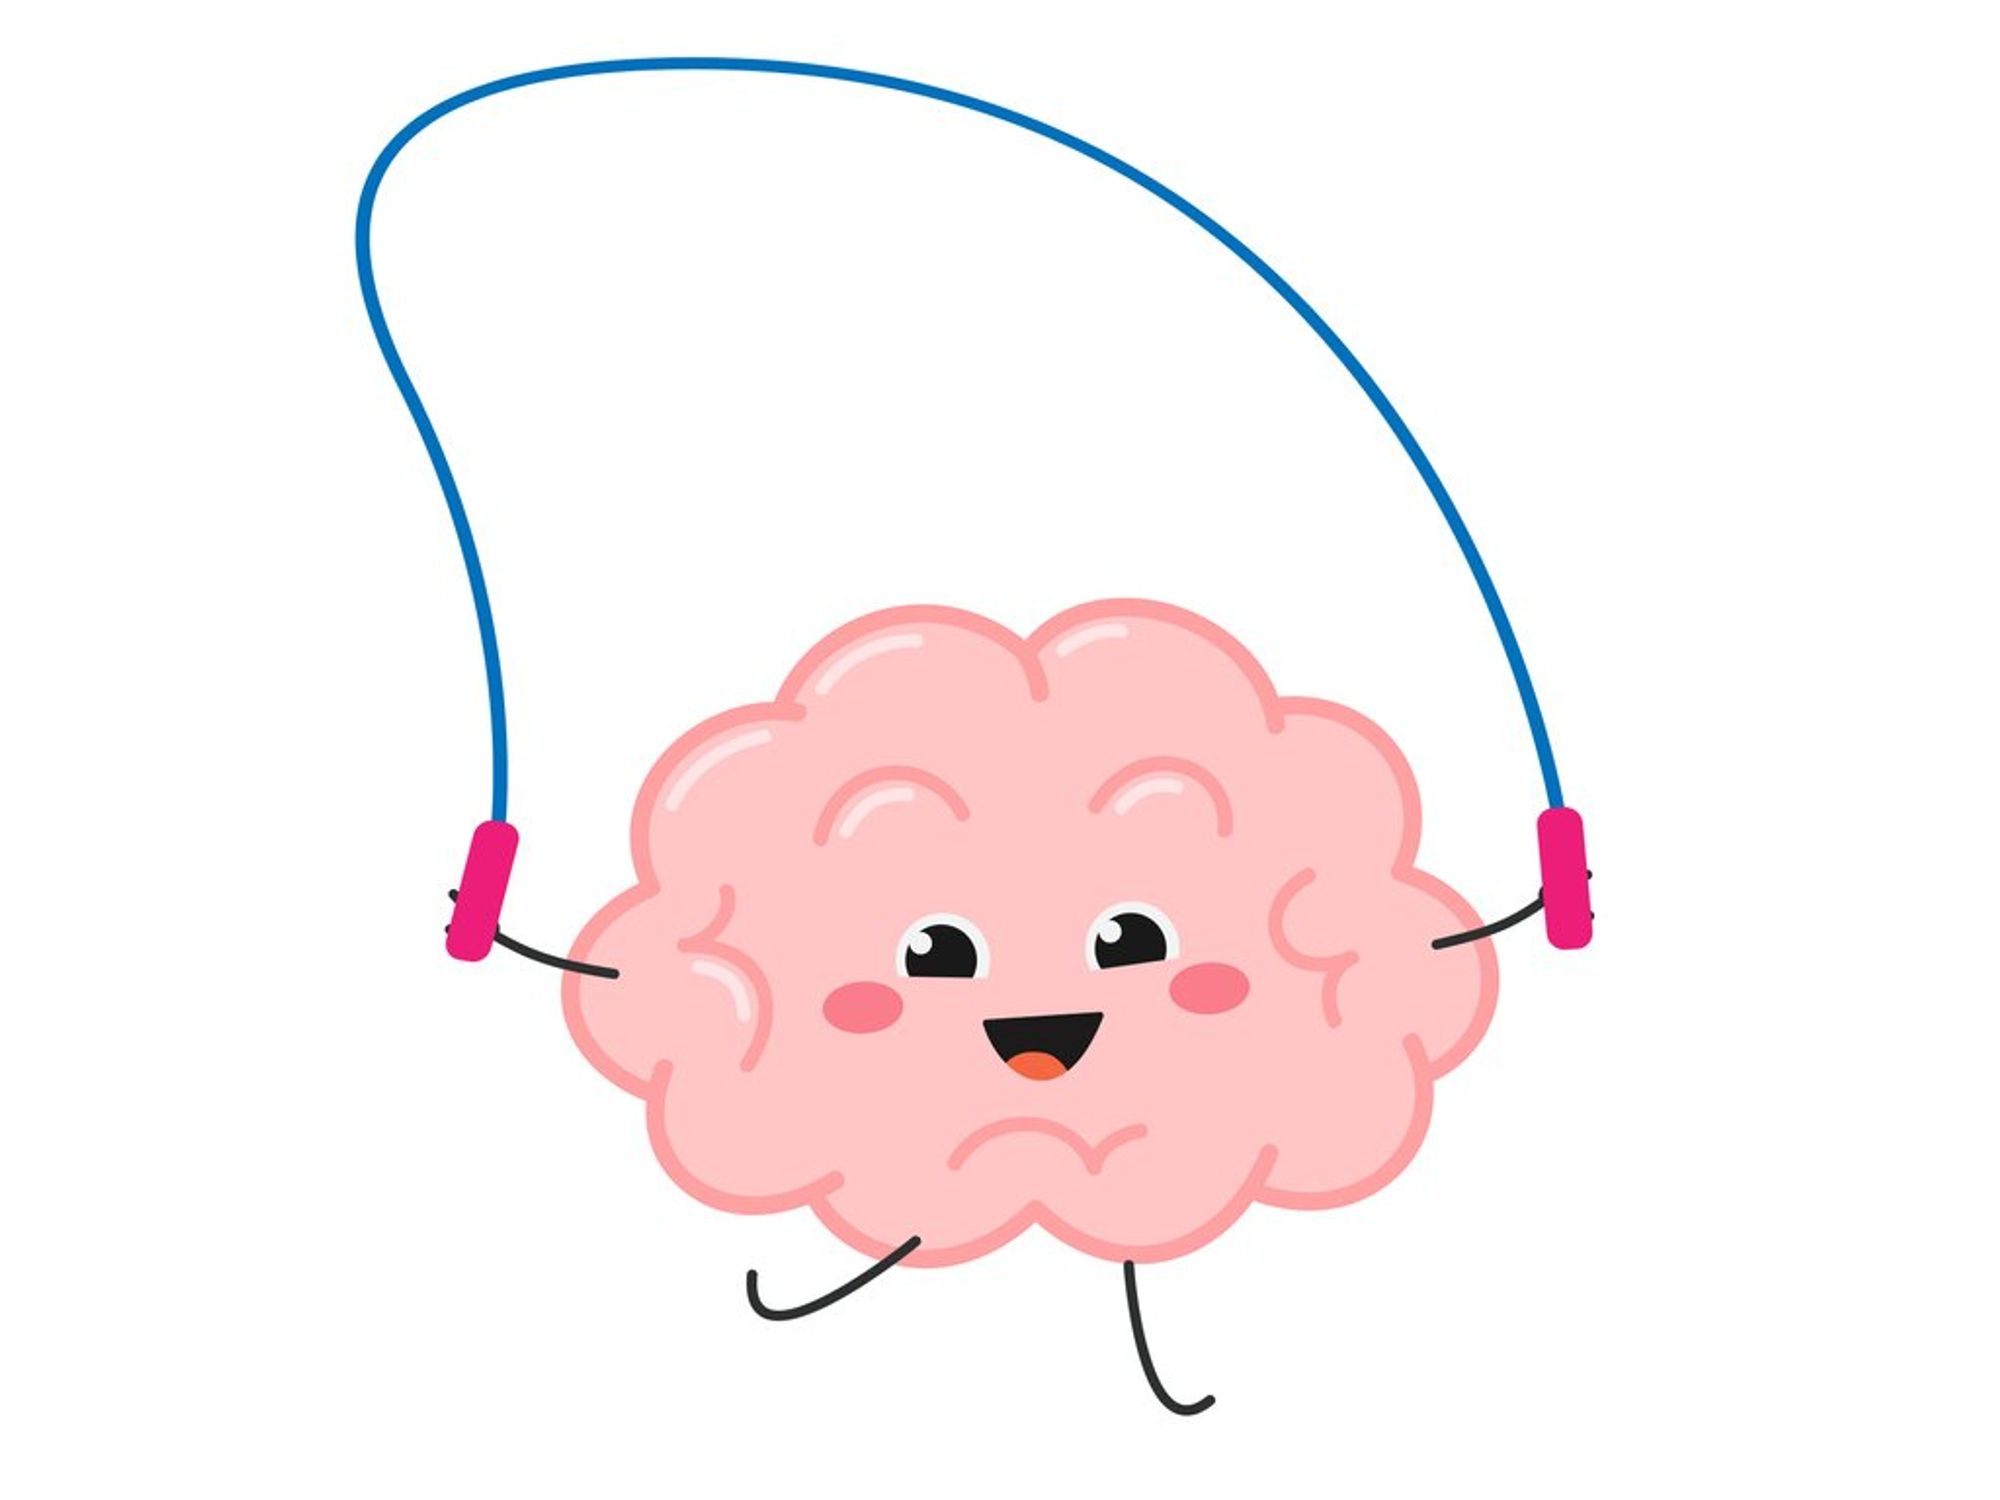 Funny CUTE cartoon brain playing jumping rope